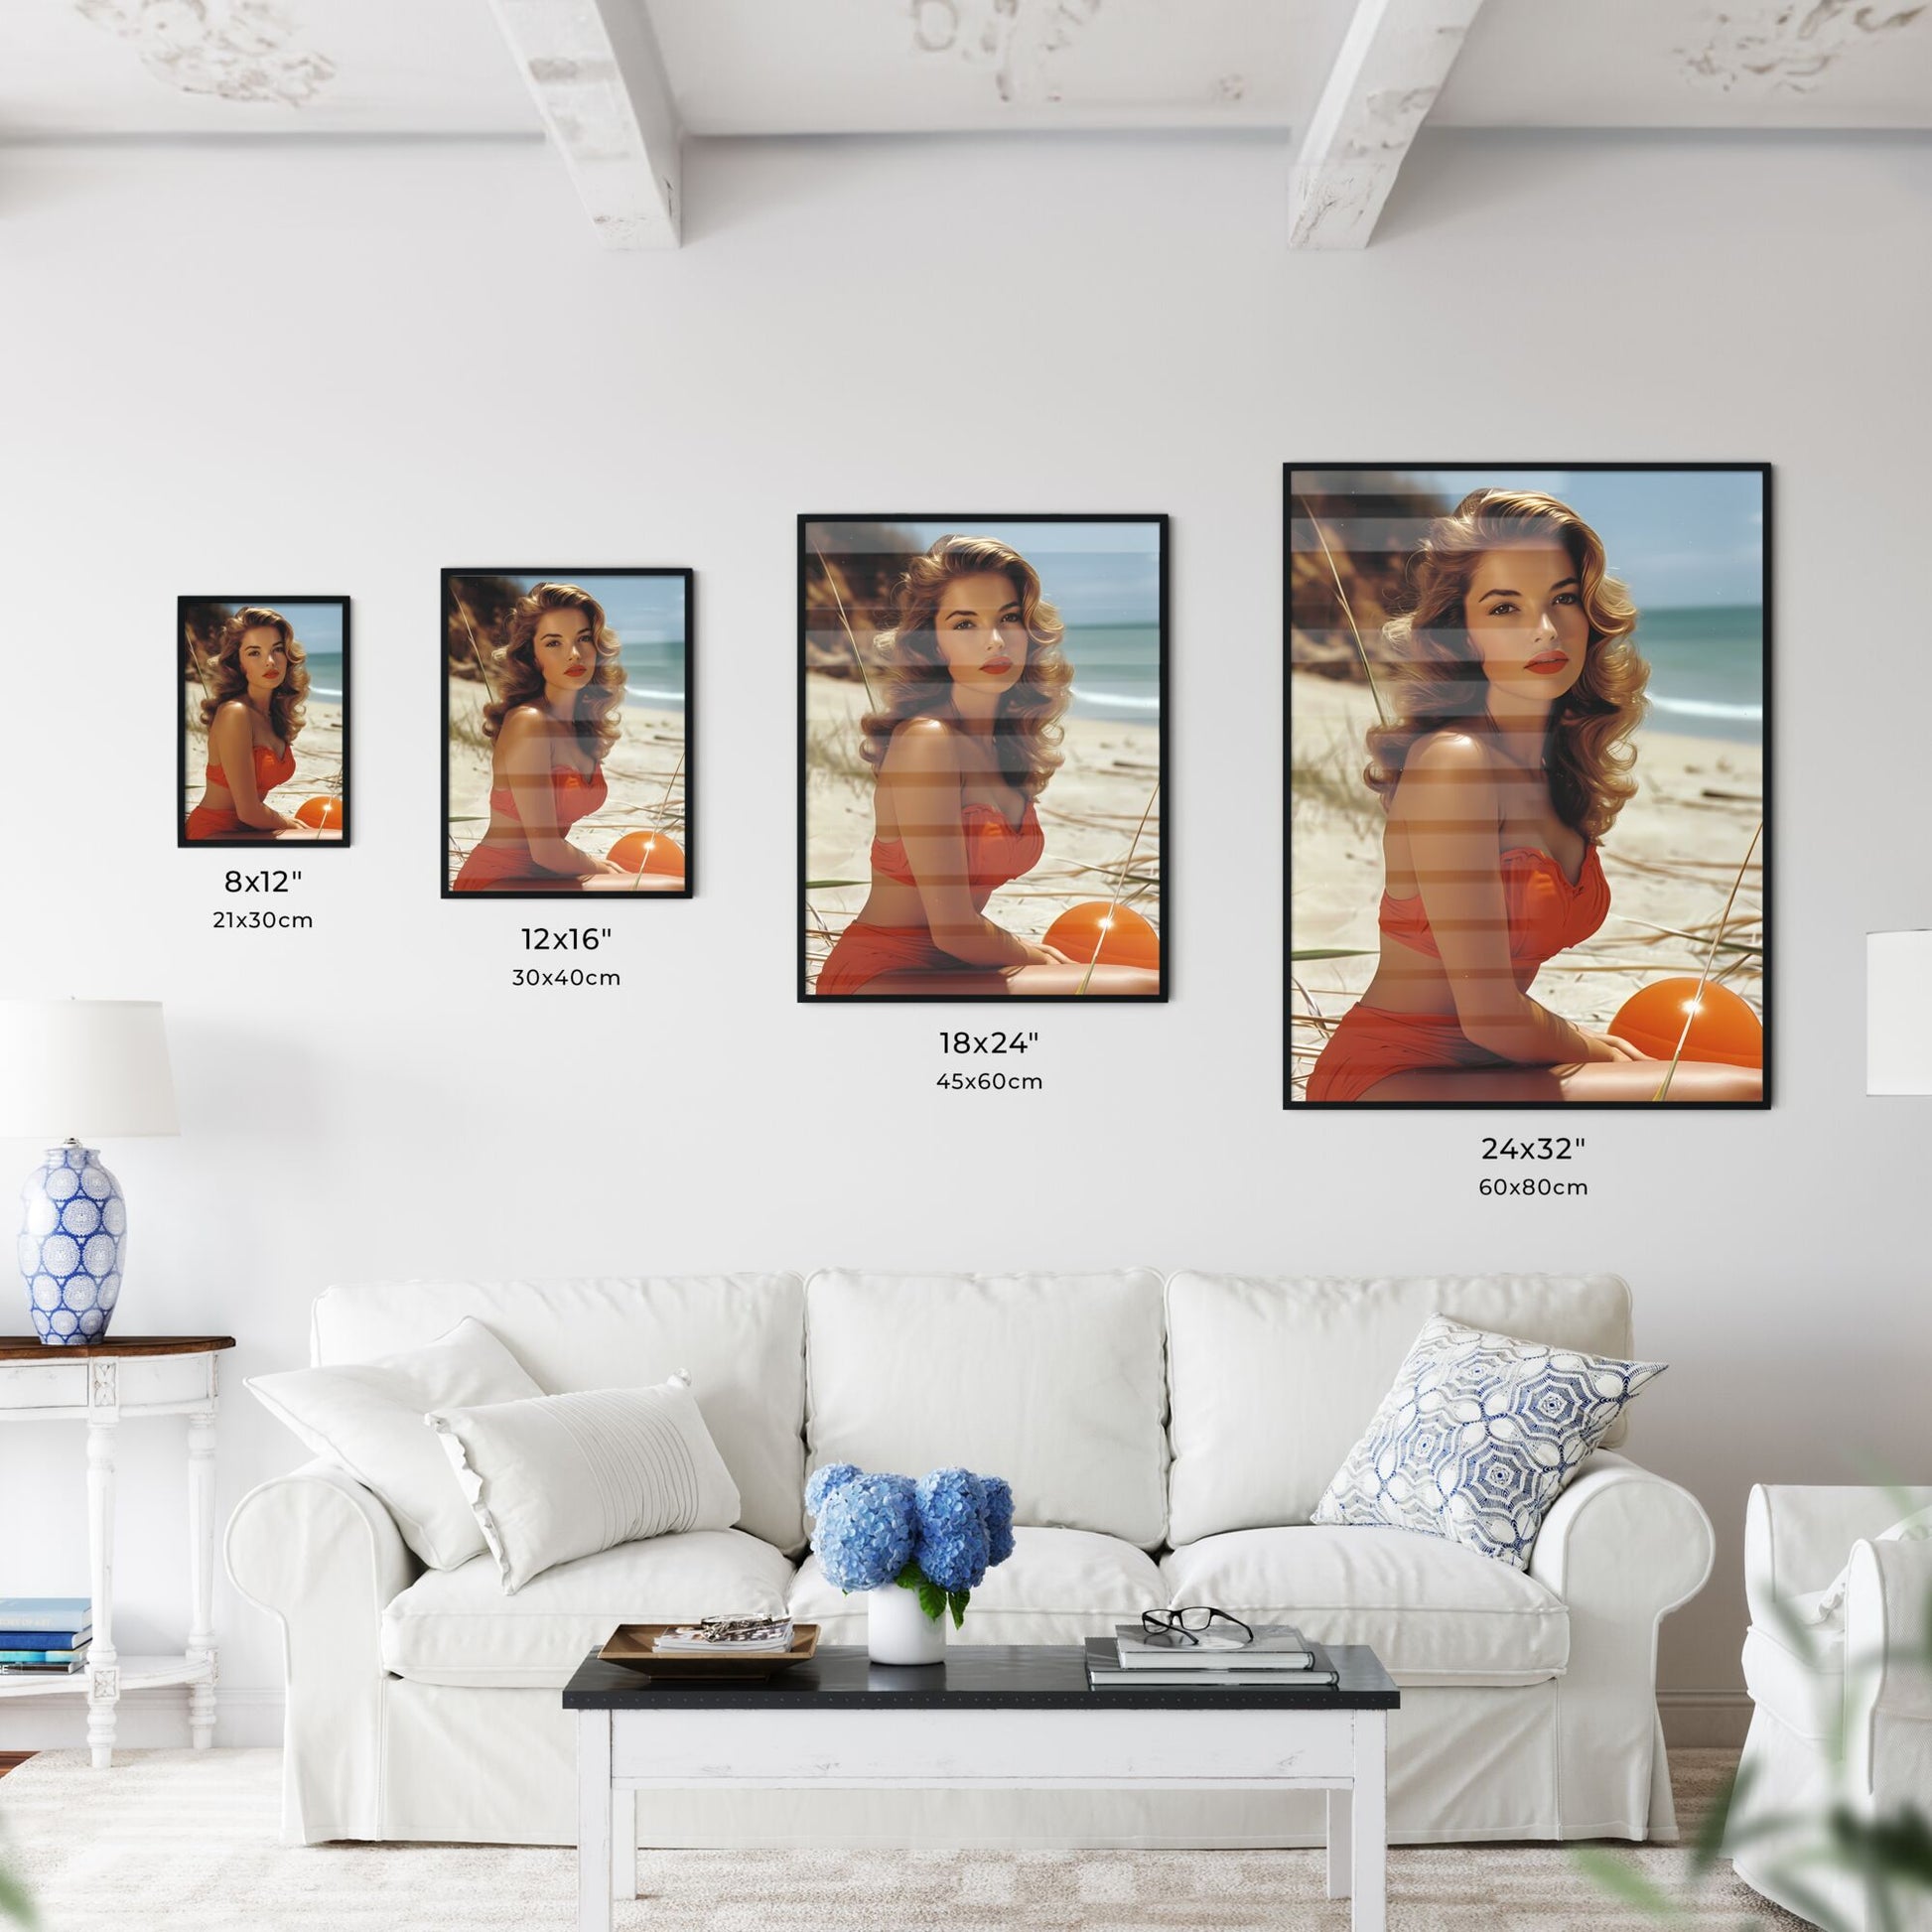 Sandra Bernhart playing - Art print of a woman in a swimsuit sitting on a beach Default Title